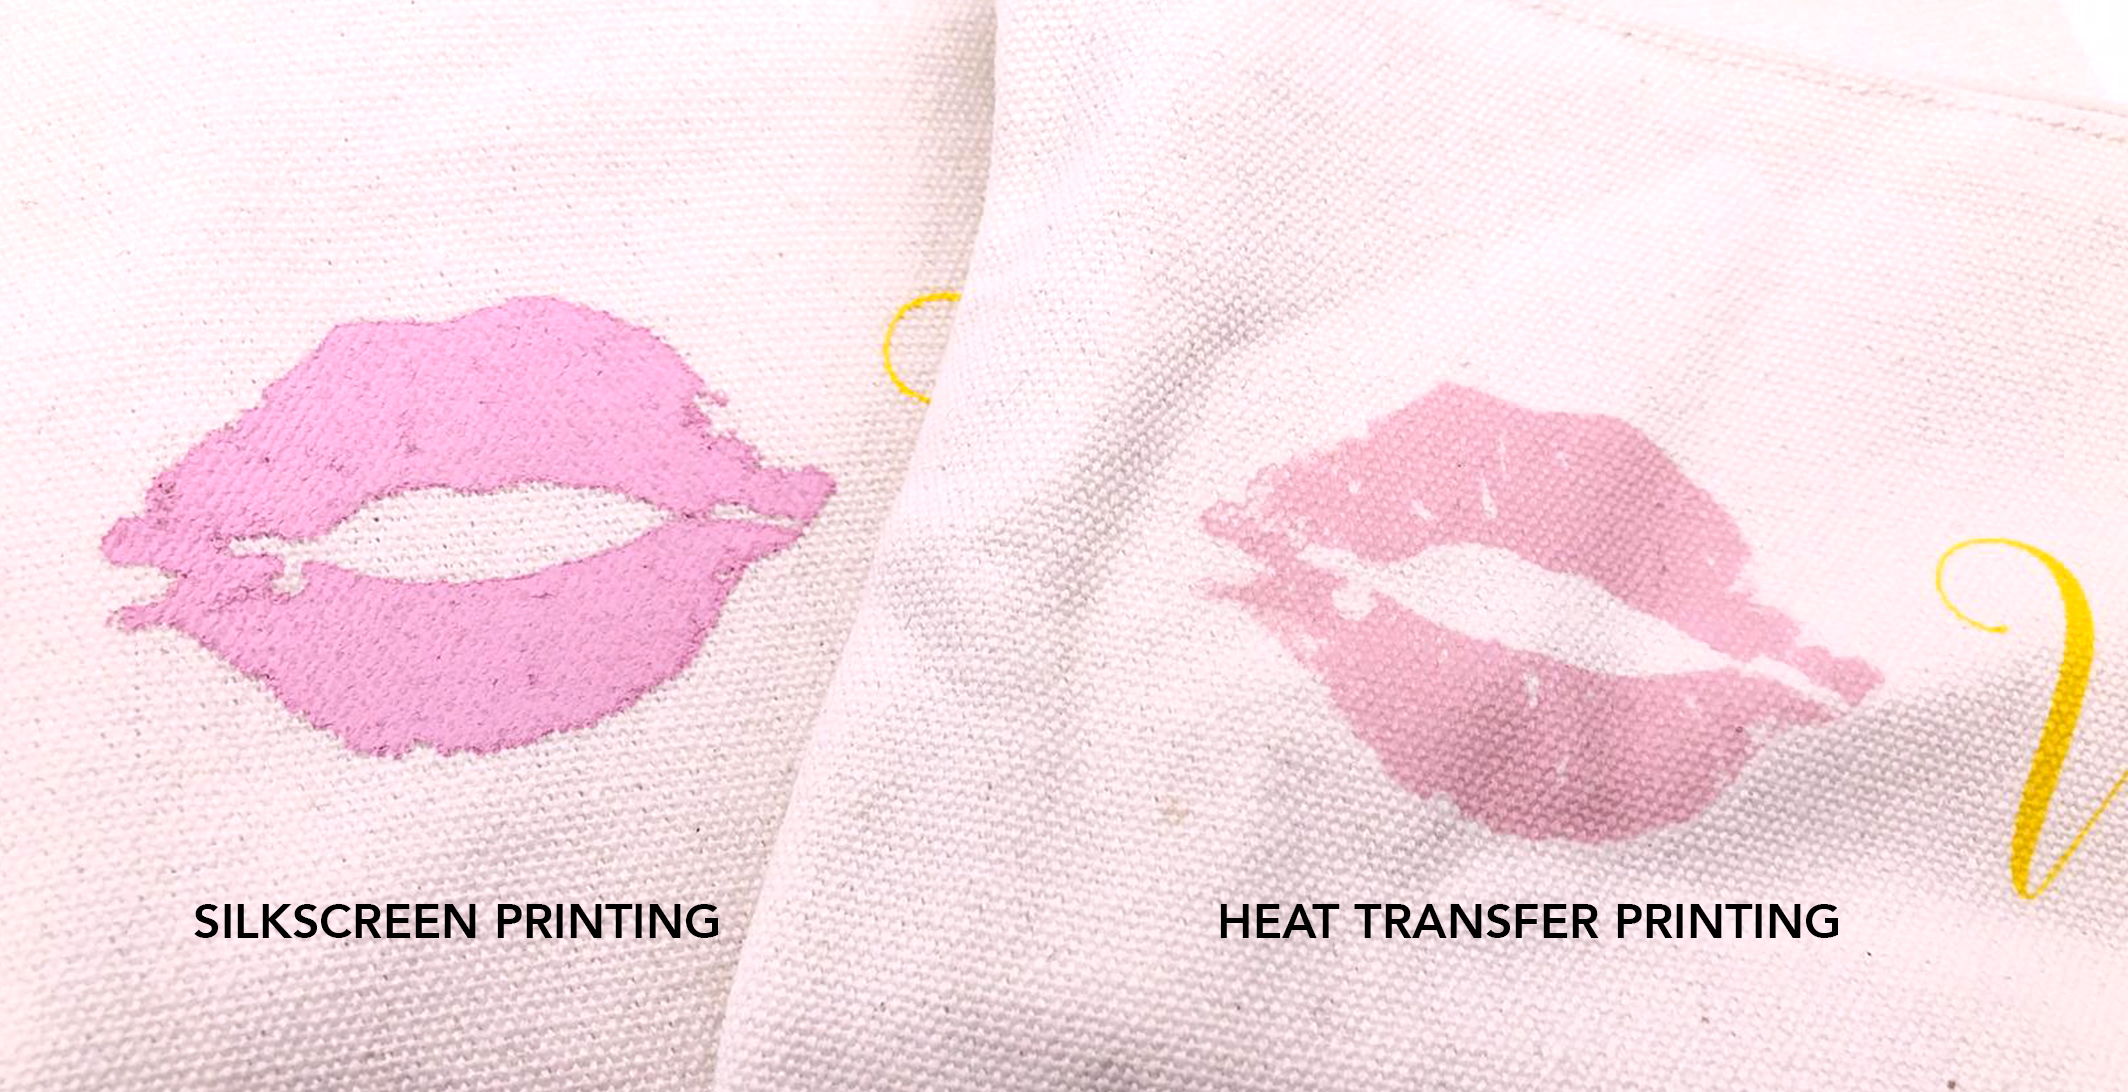 Lips silkscreen heat transfer comparison